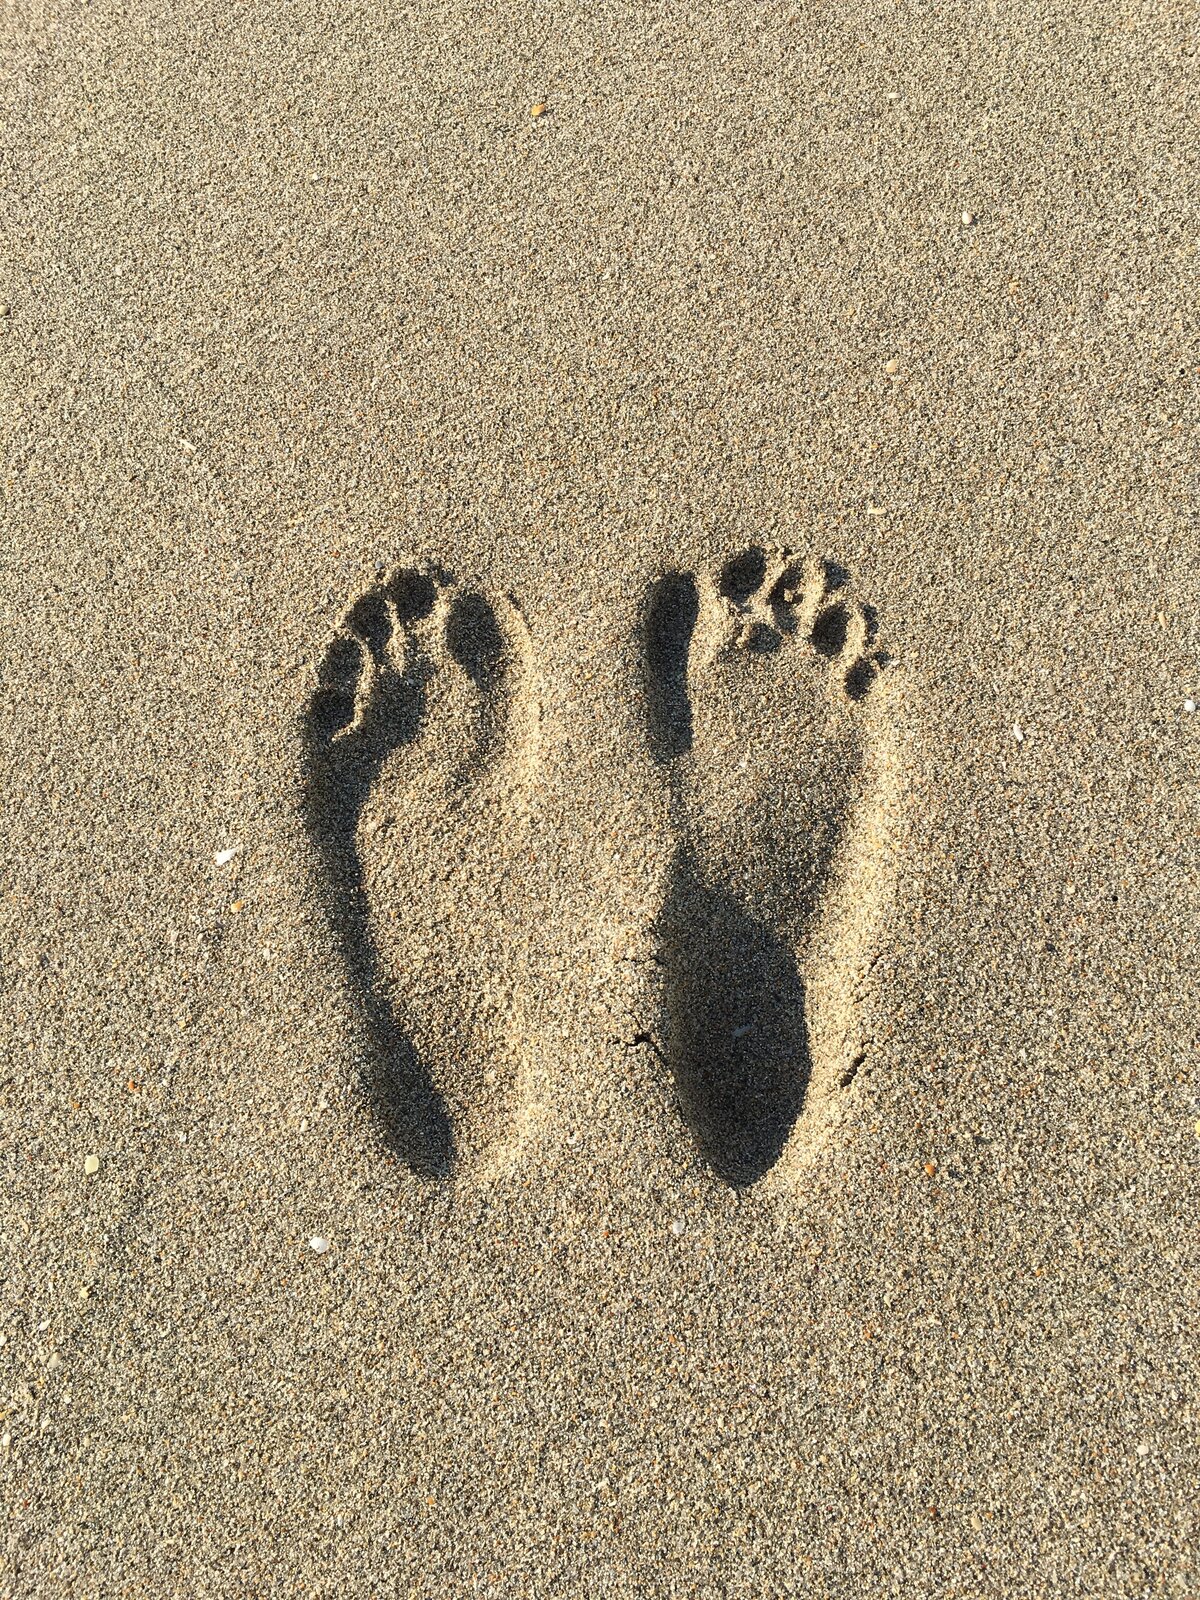 a.My Footprint